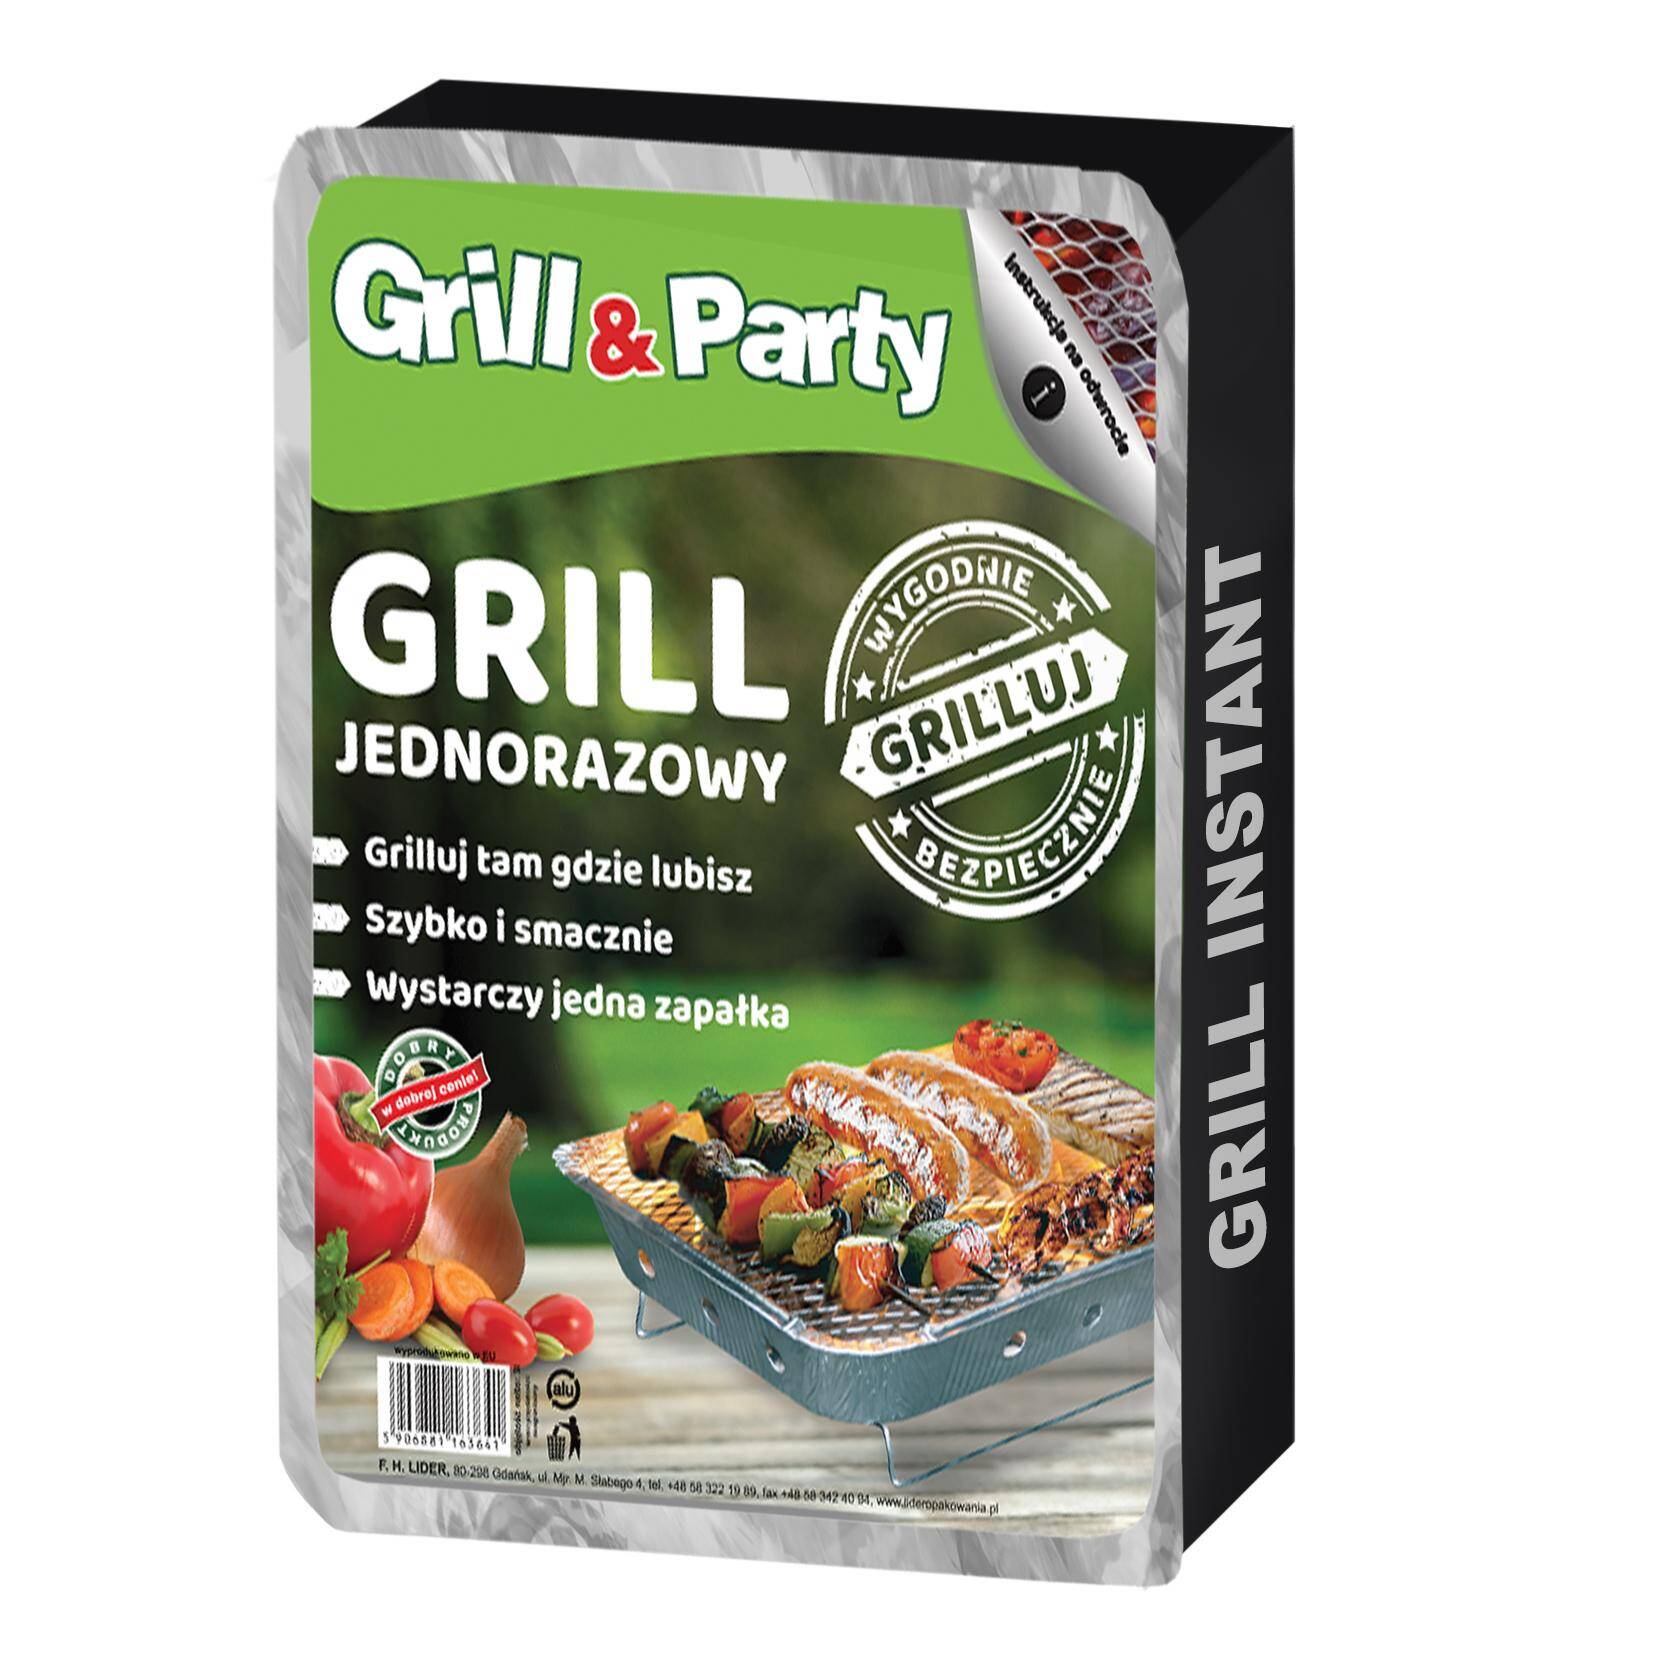 GRILL & PARTY grill jednorazowy 1 szt